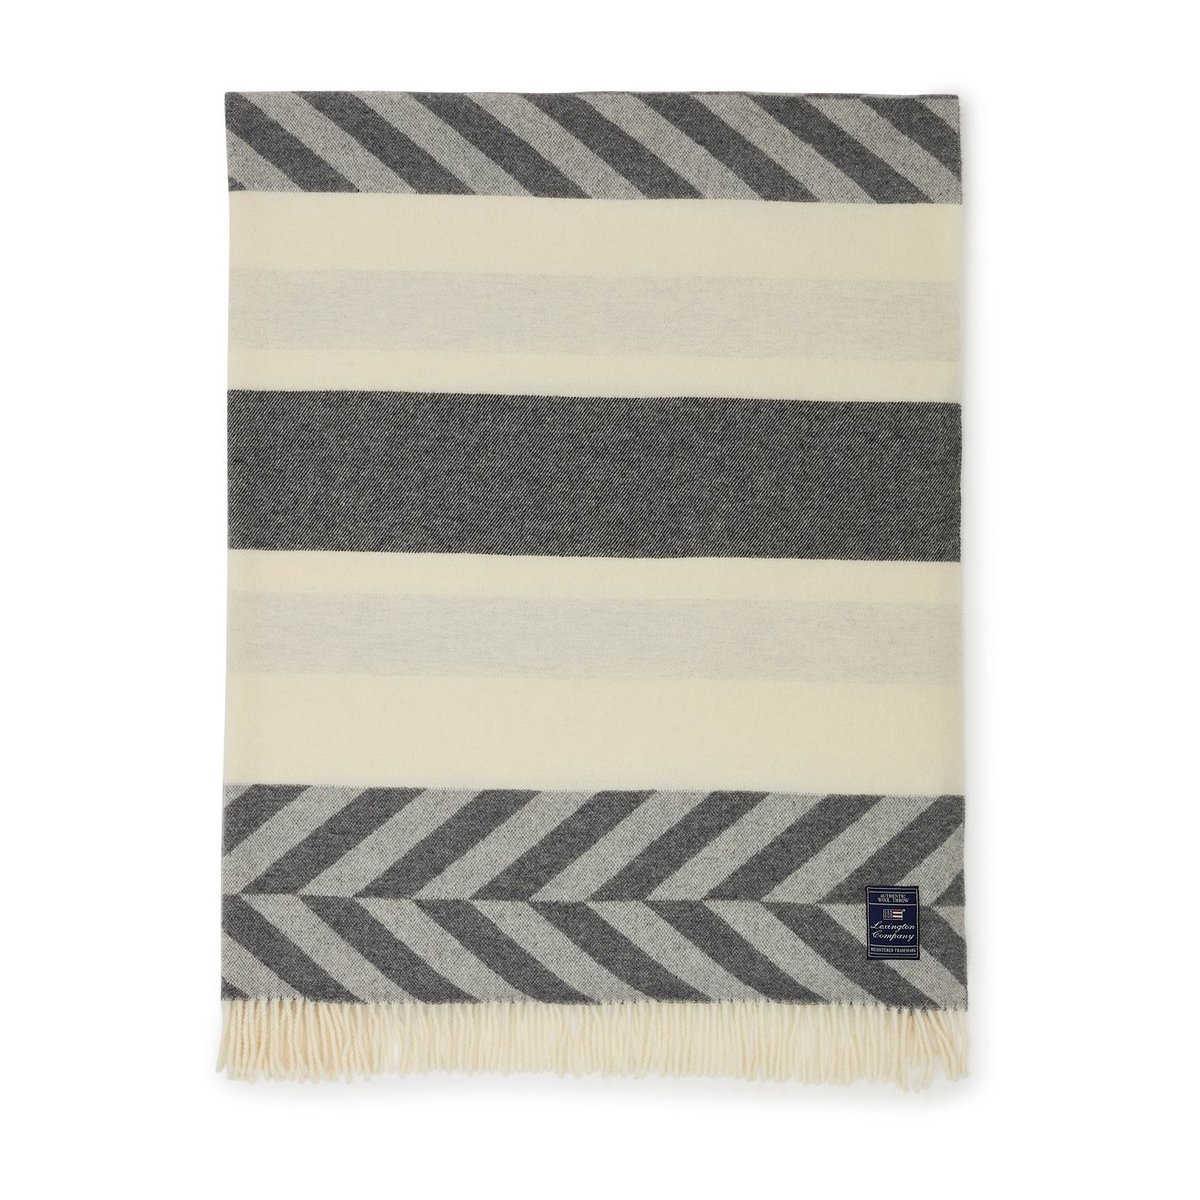 Lexington Herringbone Striped Recycled Wool plaid 130x170 cm Gray-off white